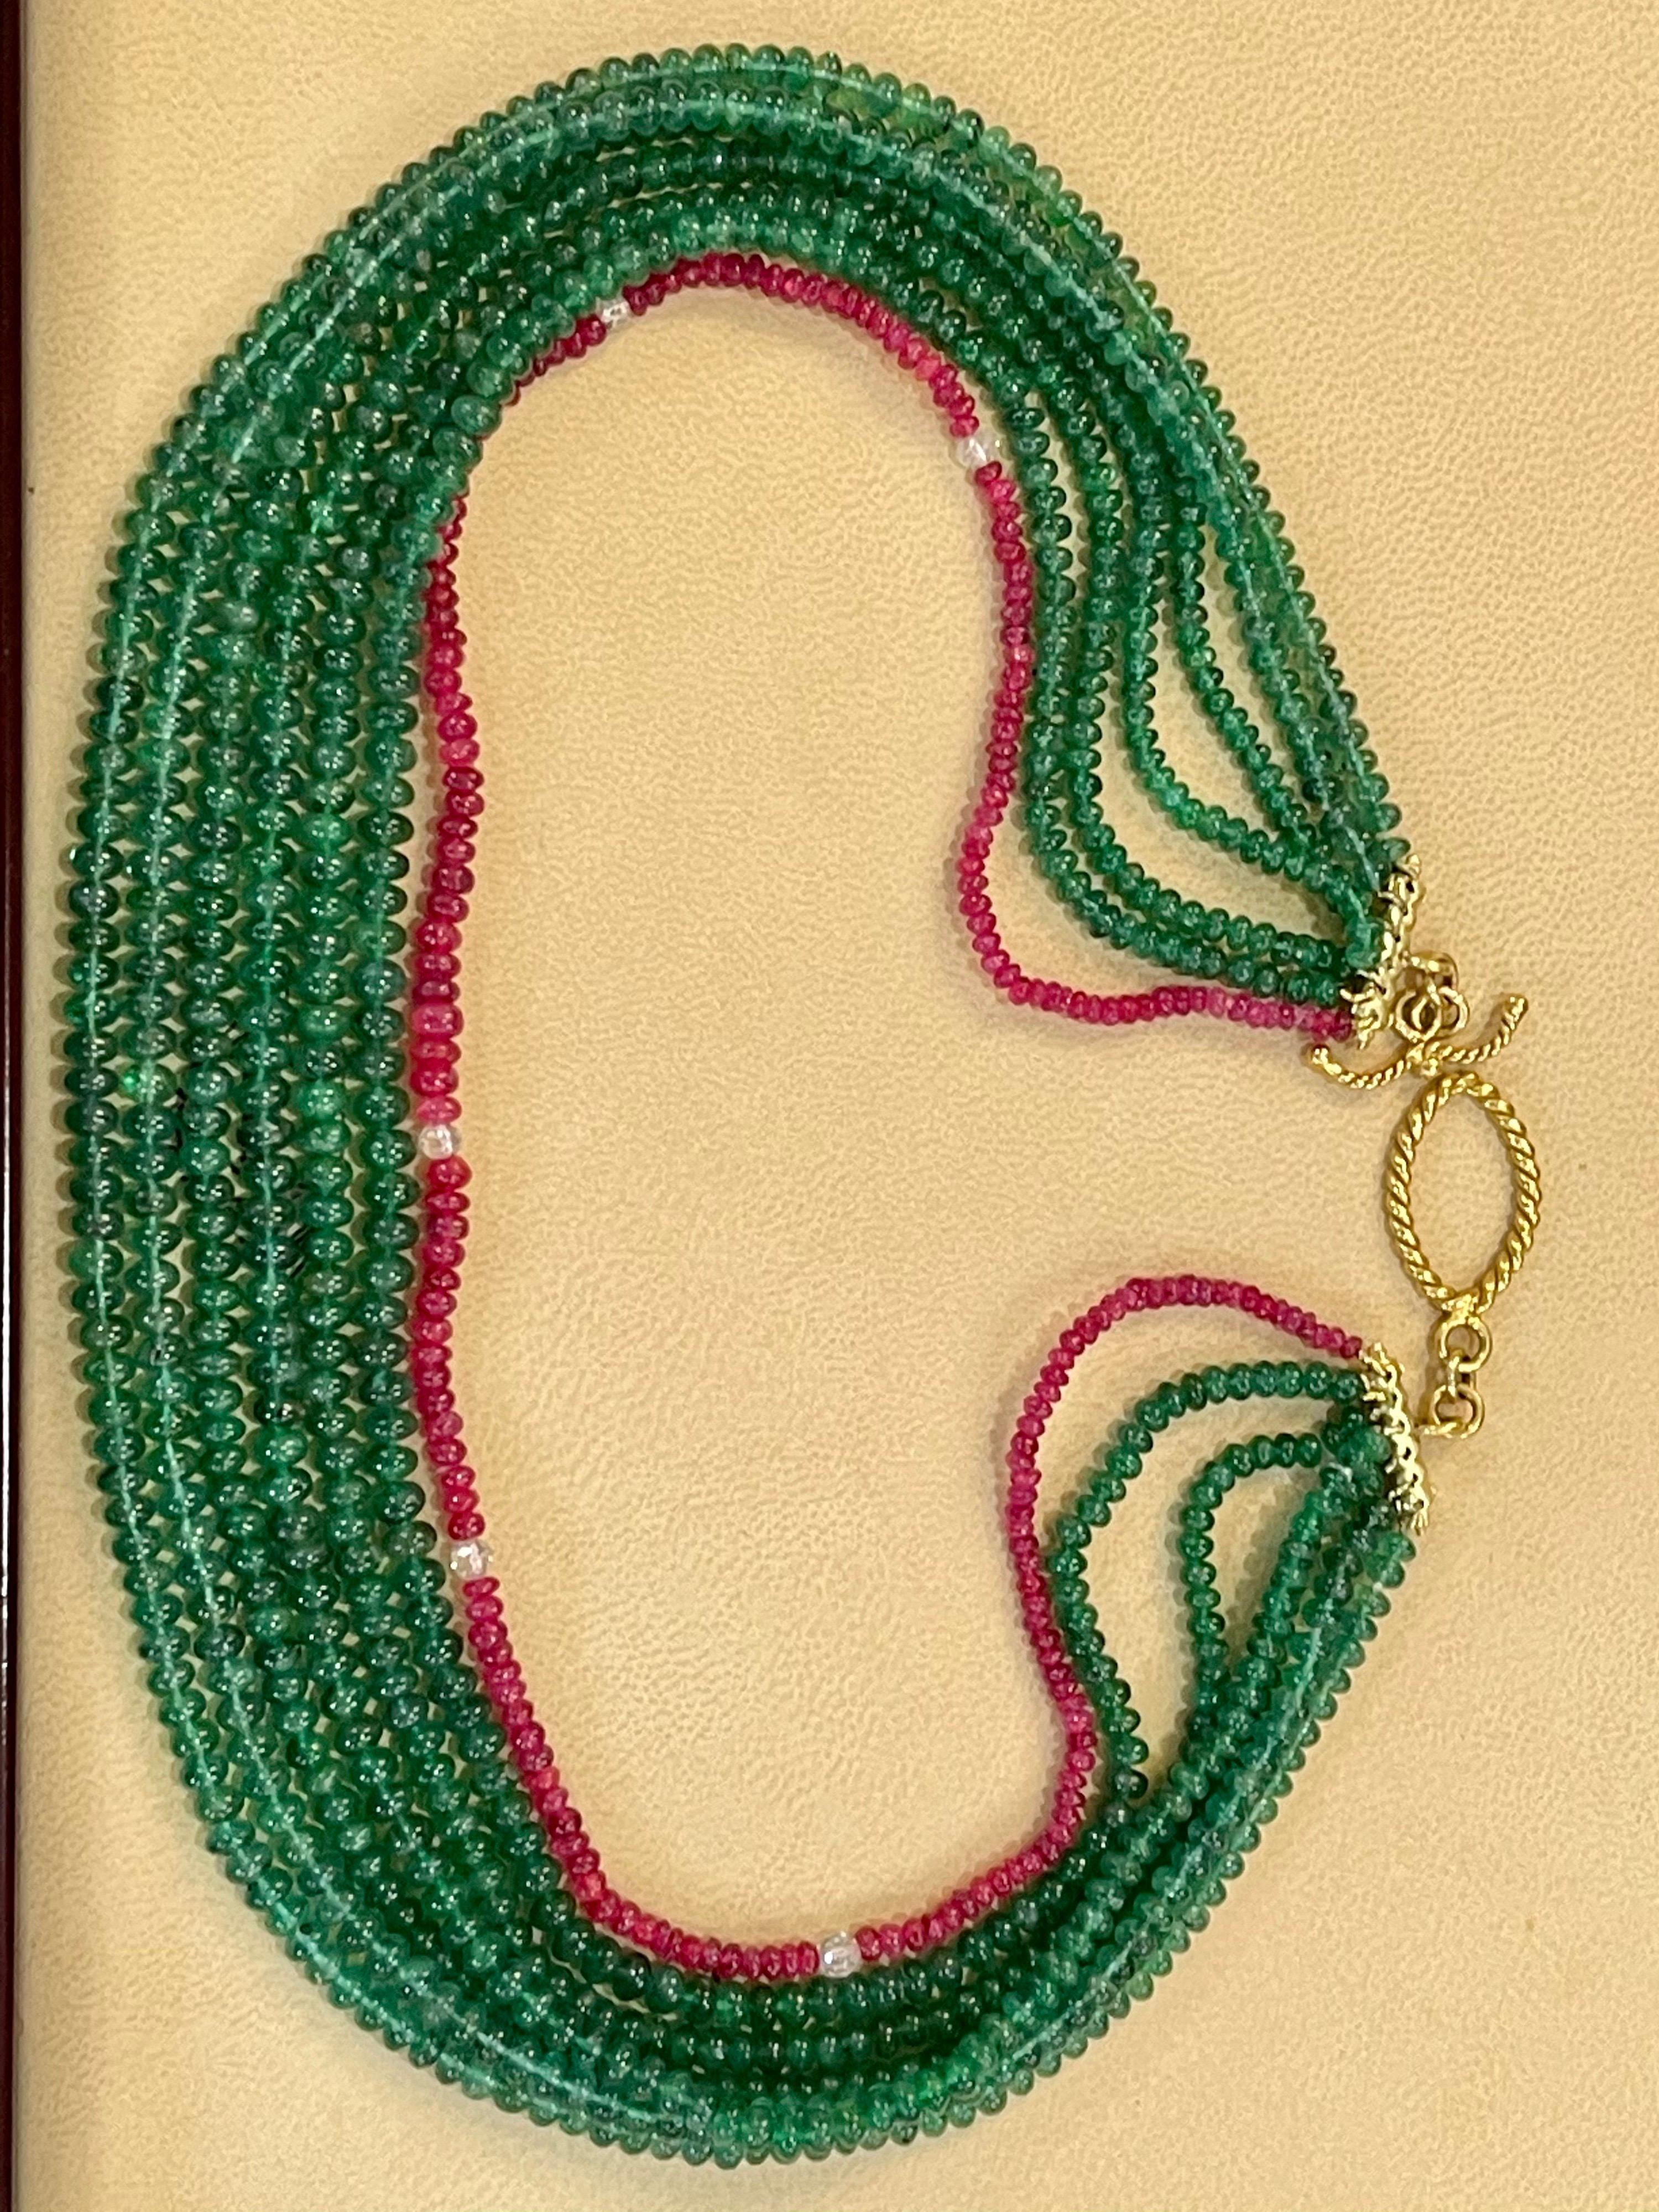 360 Carat Emerald, Burma Ruby and Diamond Beads Necklace 18 Karat Yellow Gold For Sale 4